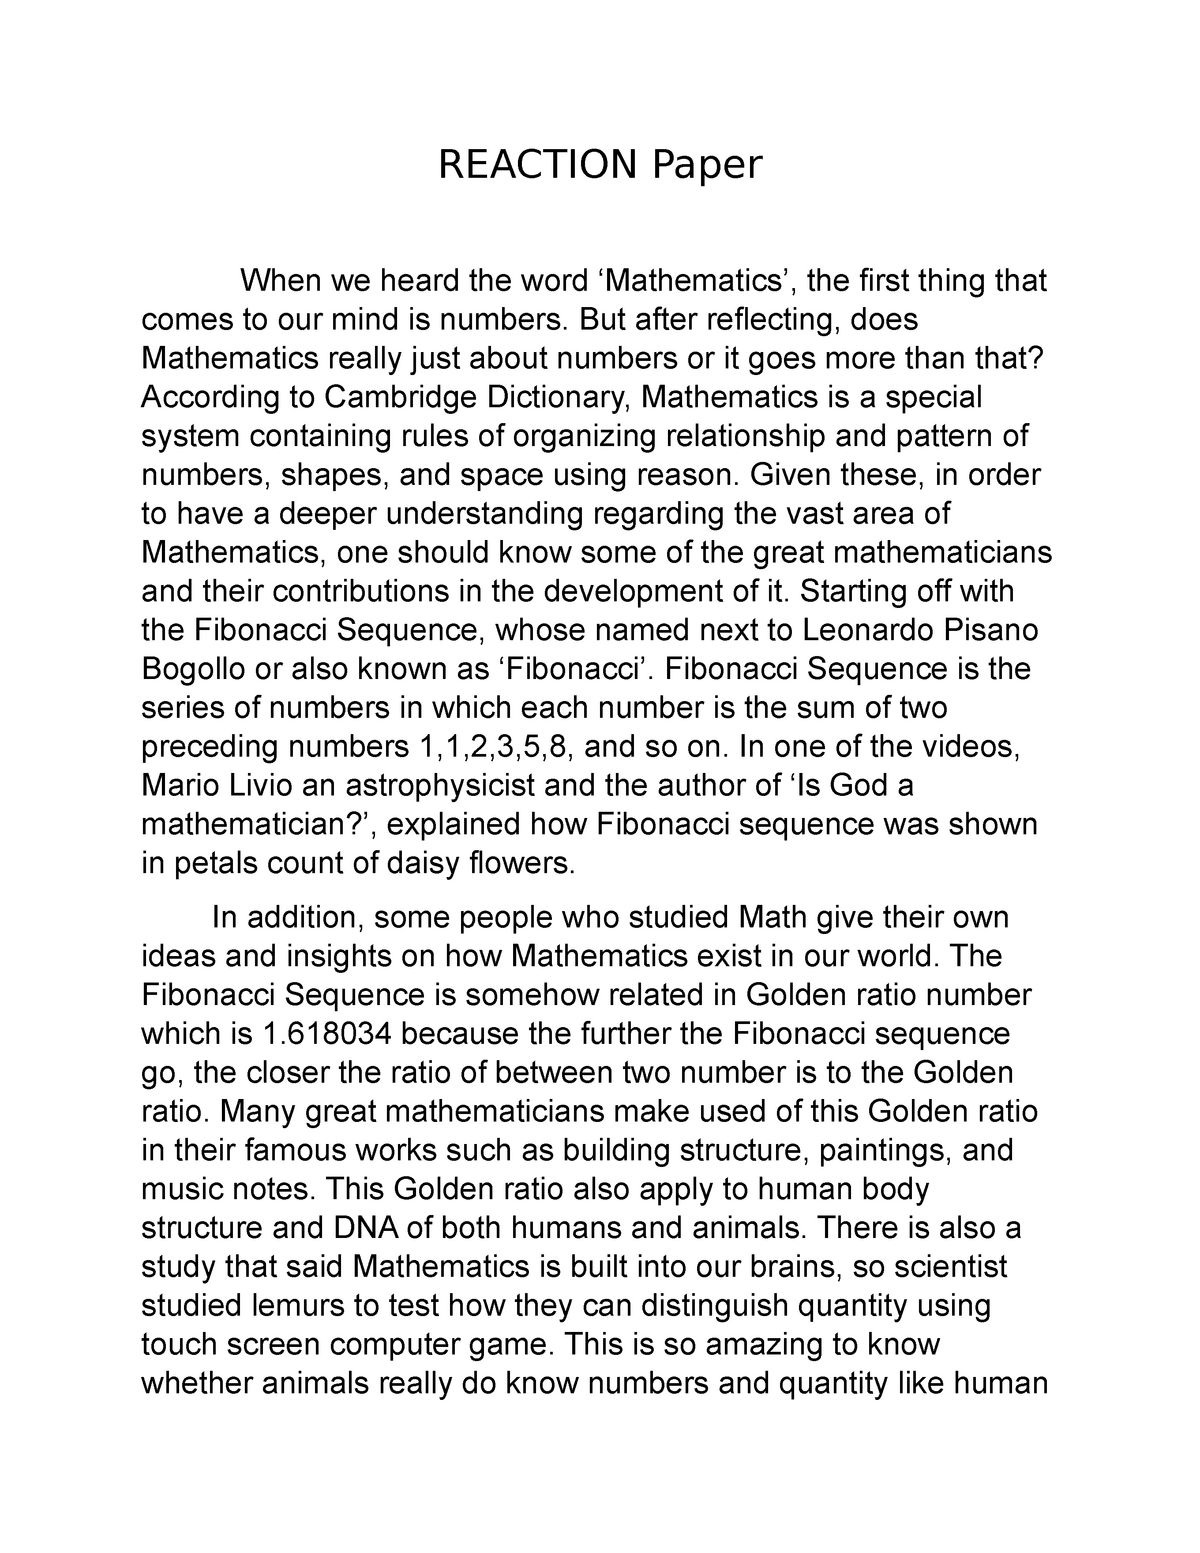 math essay reflection